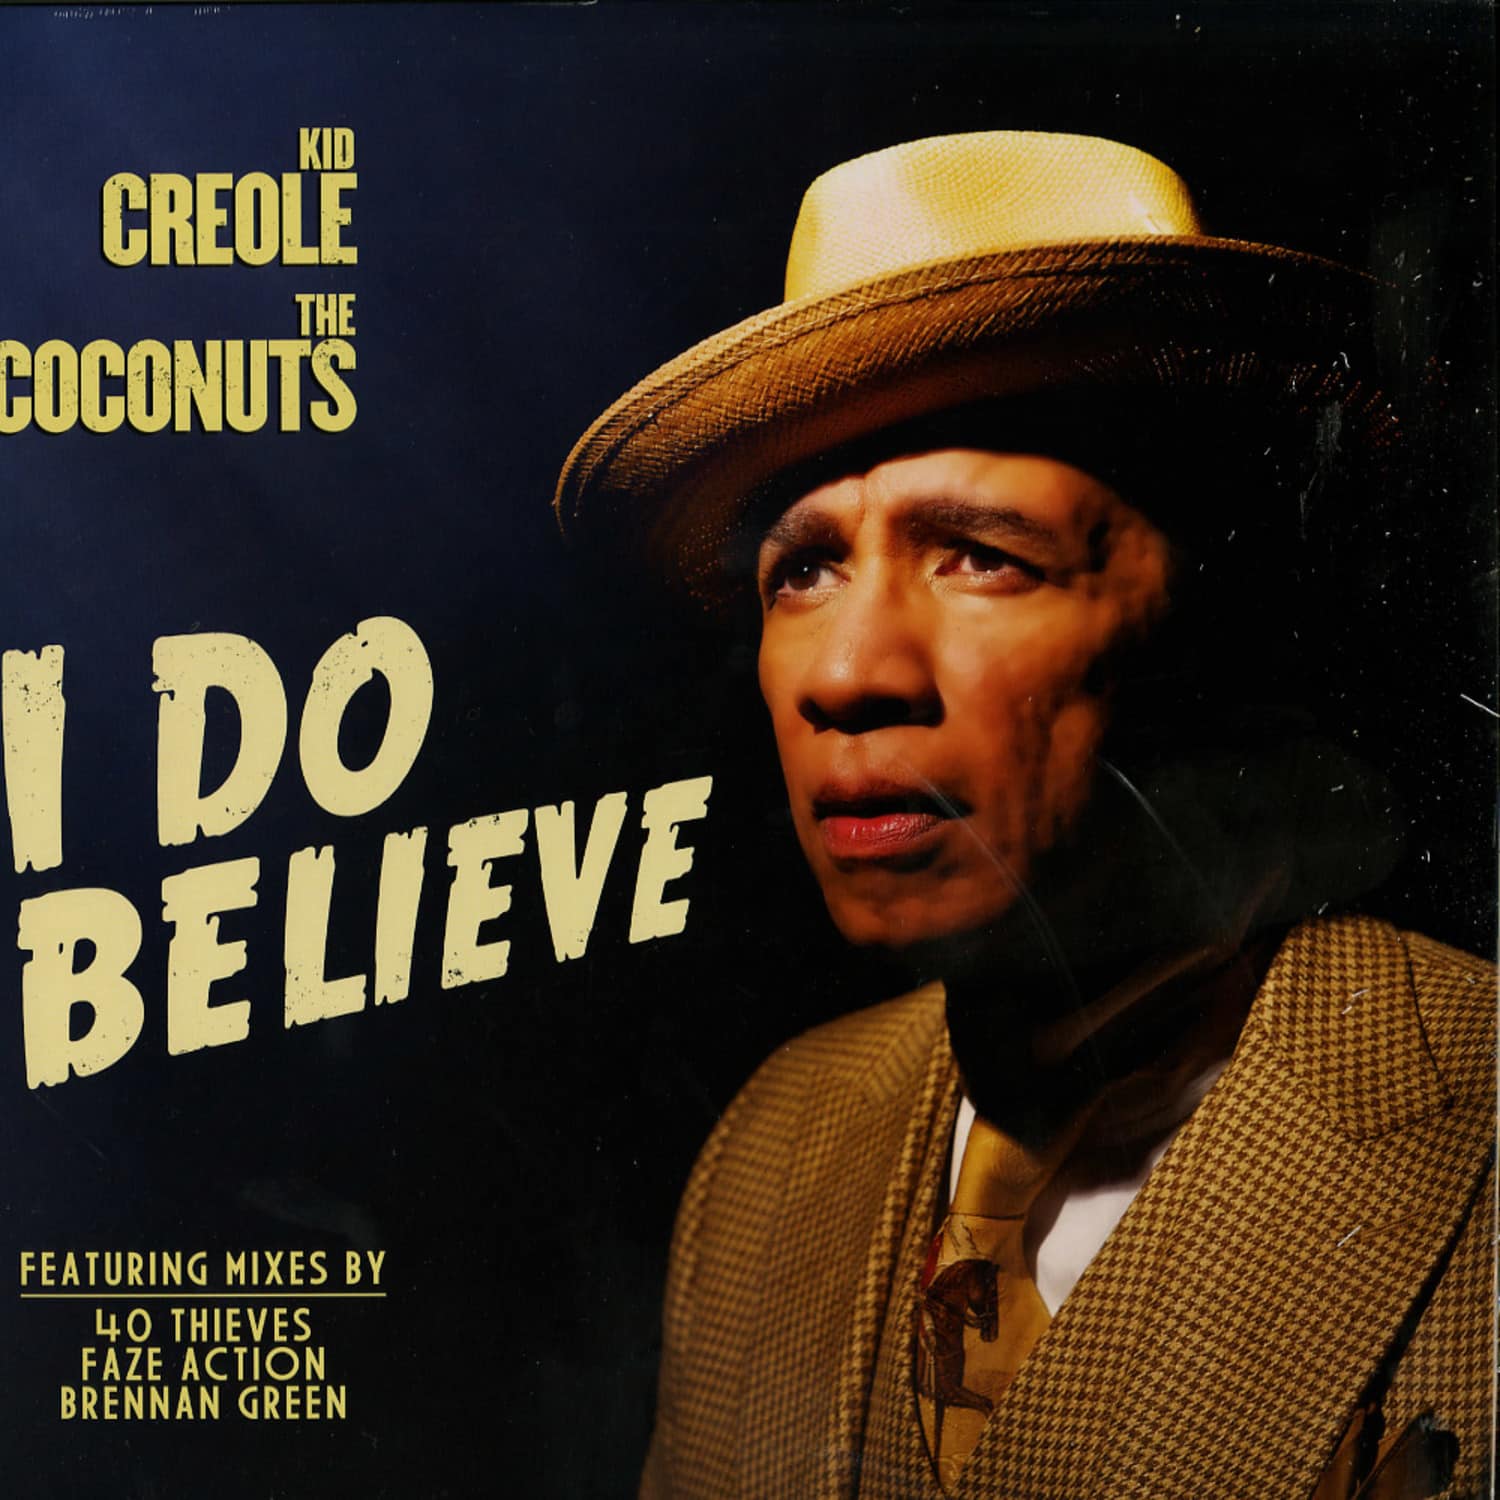 Kid Creole - I DO BELIEVE 